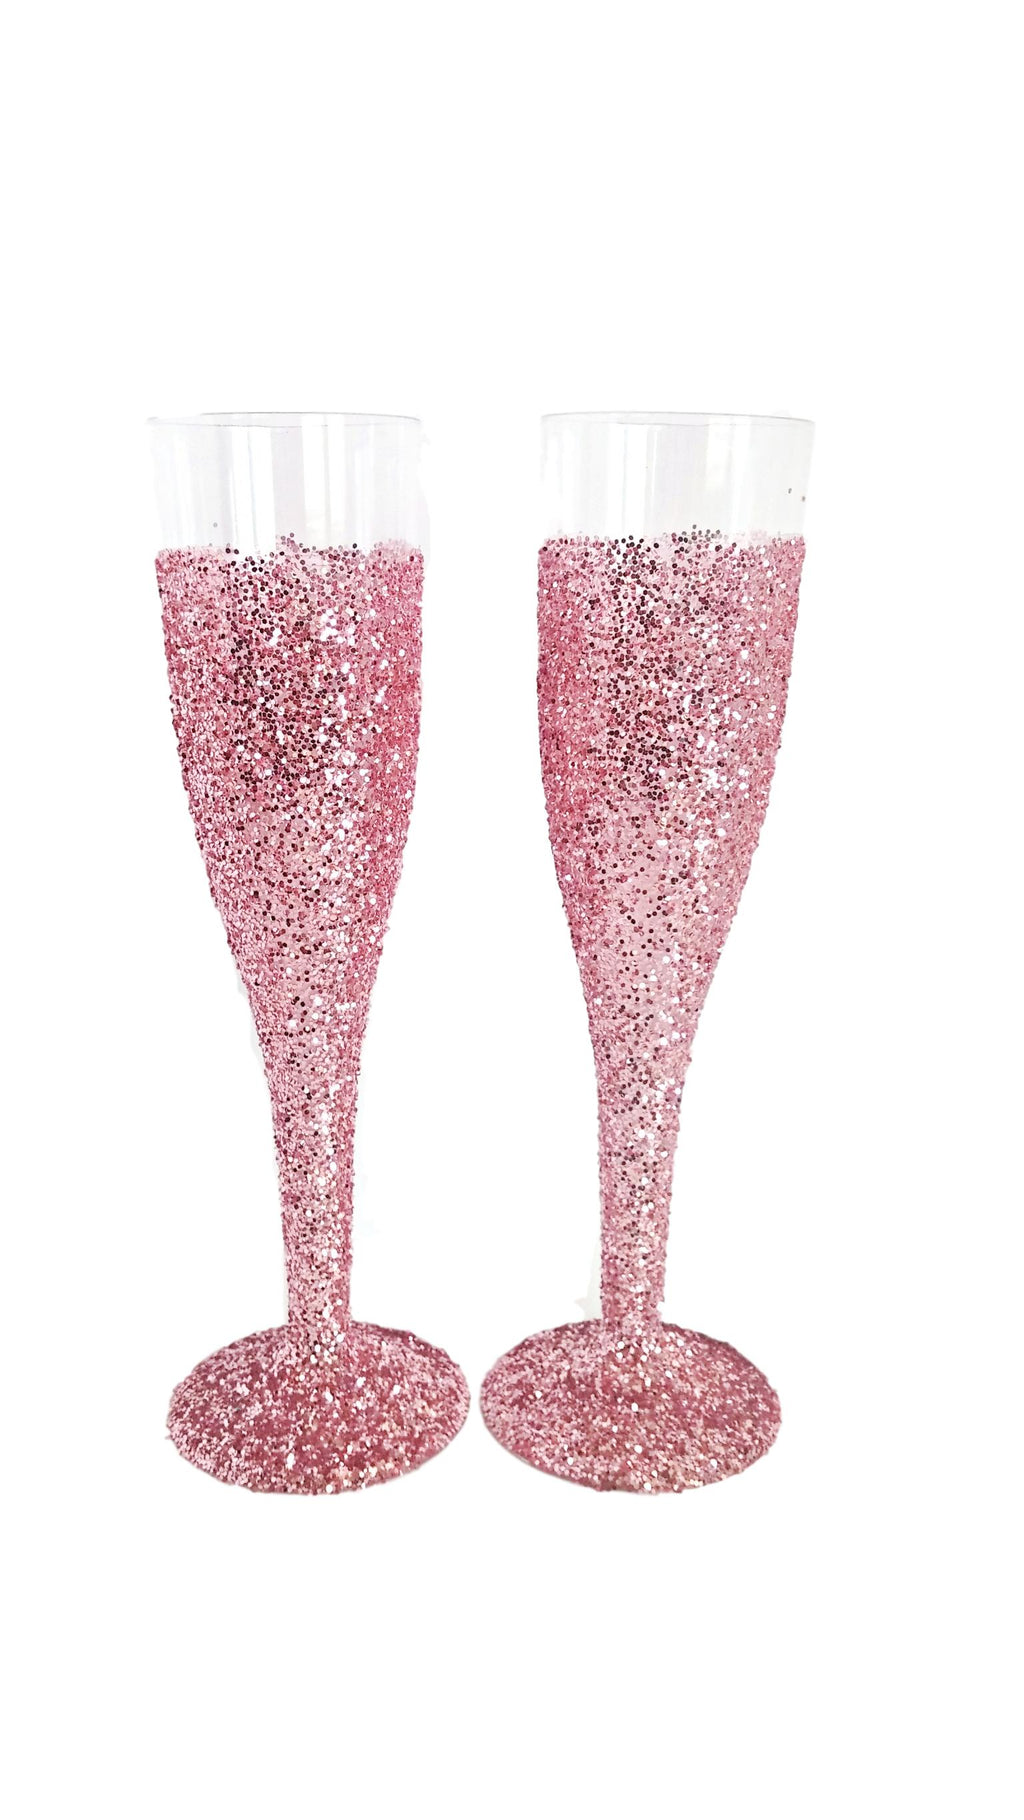 Light pink plastic champagne flutes 